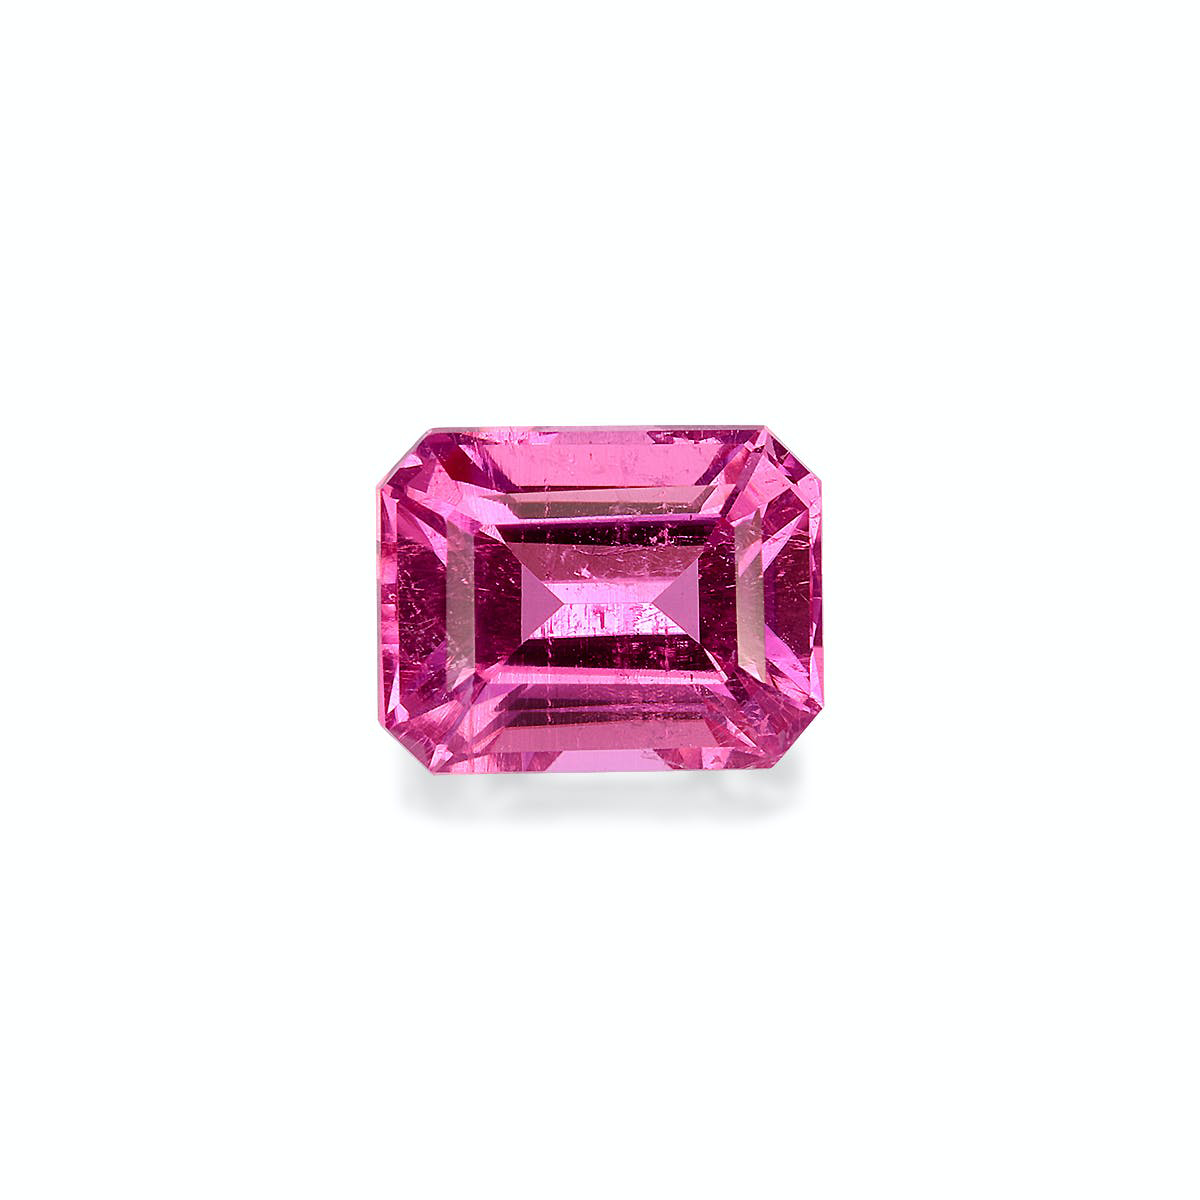 Picture of Fuscia Pink Rubellite Tourmaline 2.04ct - 8x6mm (RL1236)